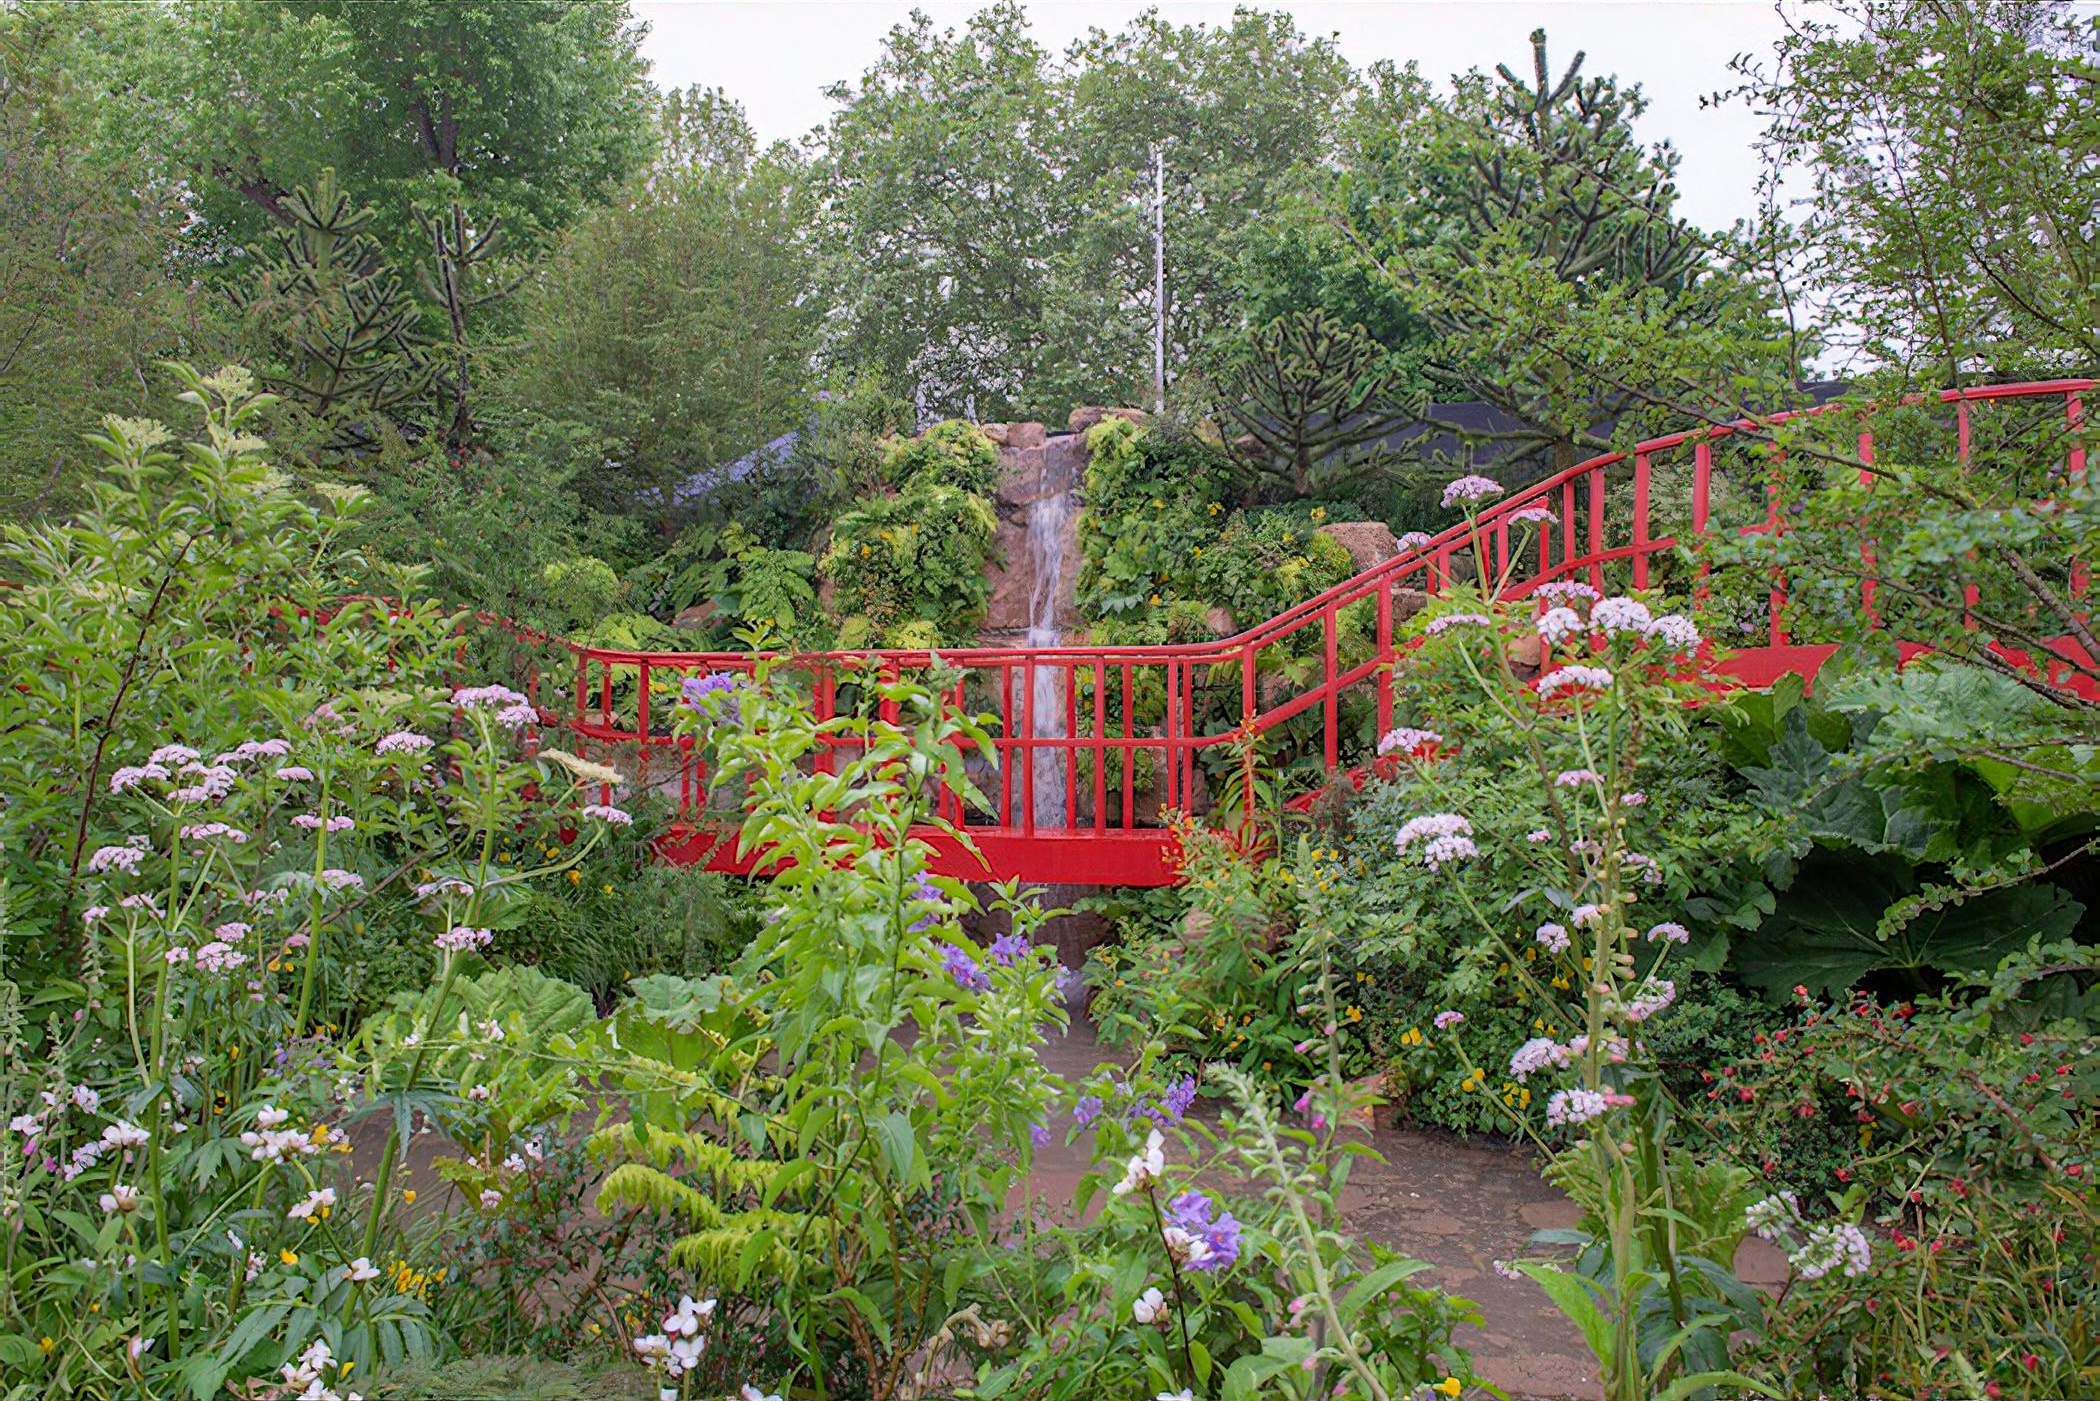 The Trailfinders 'Undiscovered Latin America' Garden by West London based garden designer Jonathan Snow Chelsea Flower Show 2019